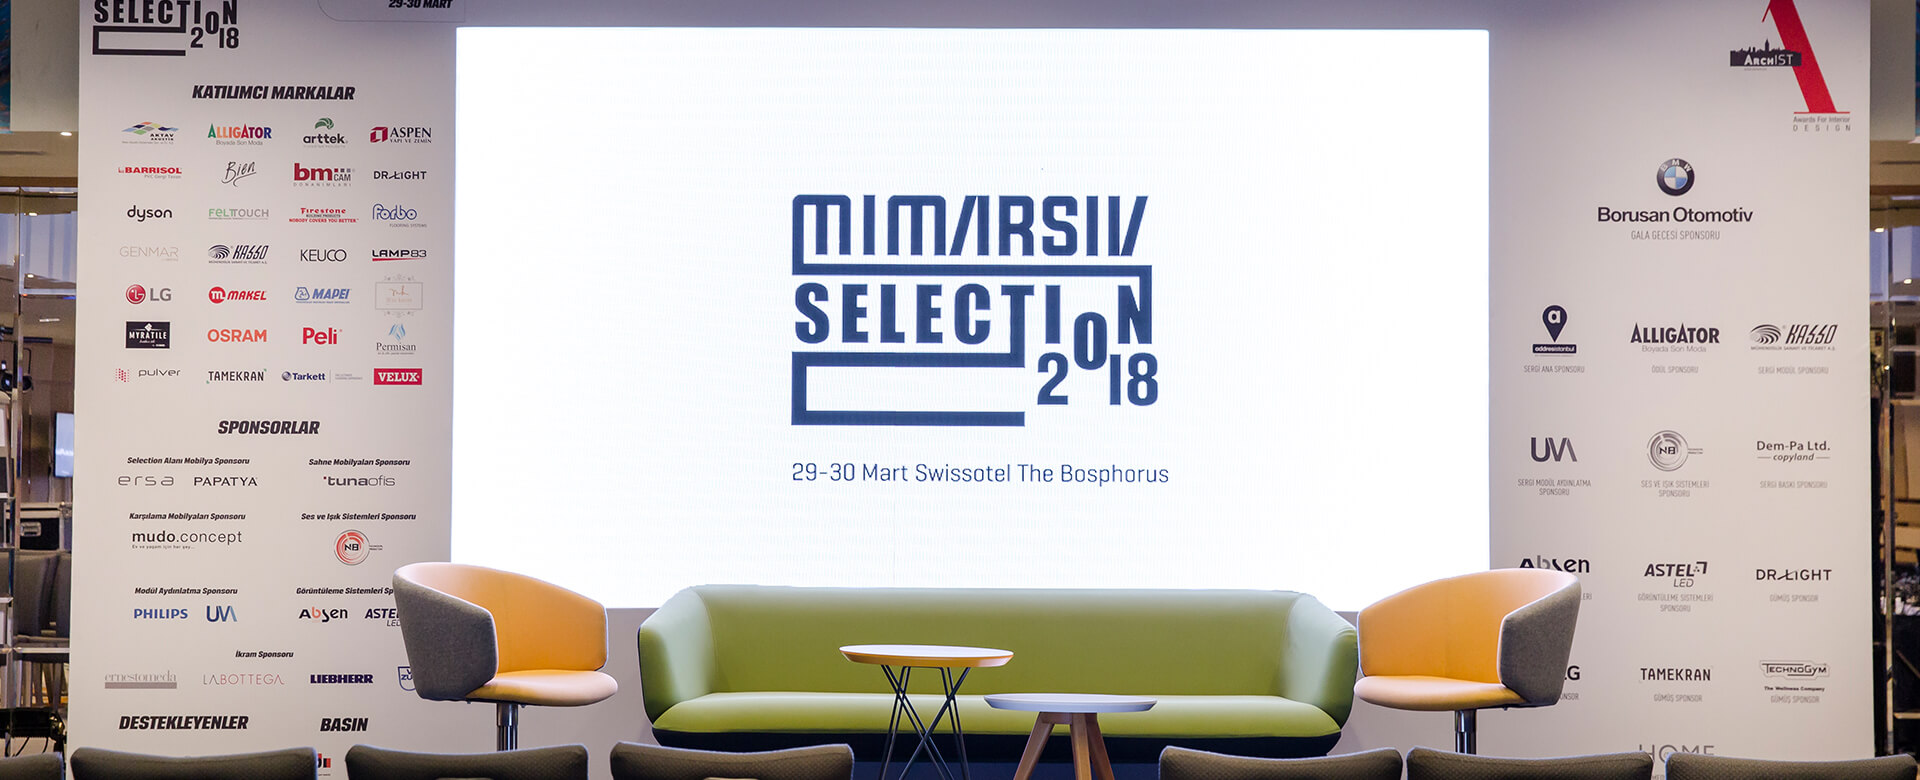 Mimarşiv Selection 2018